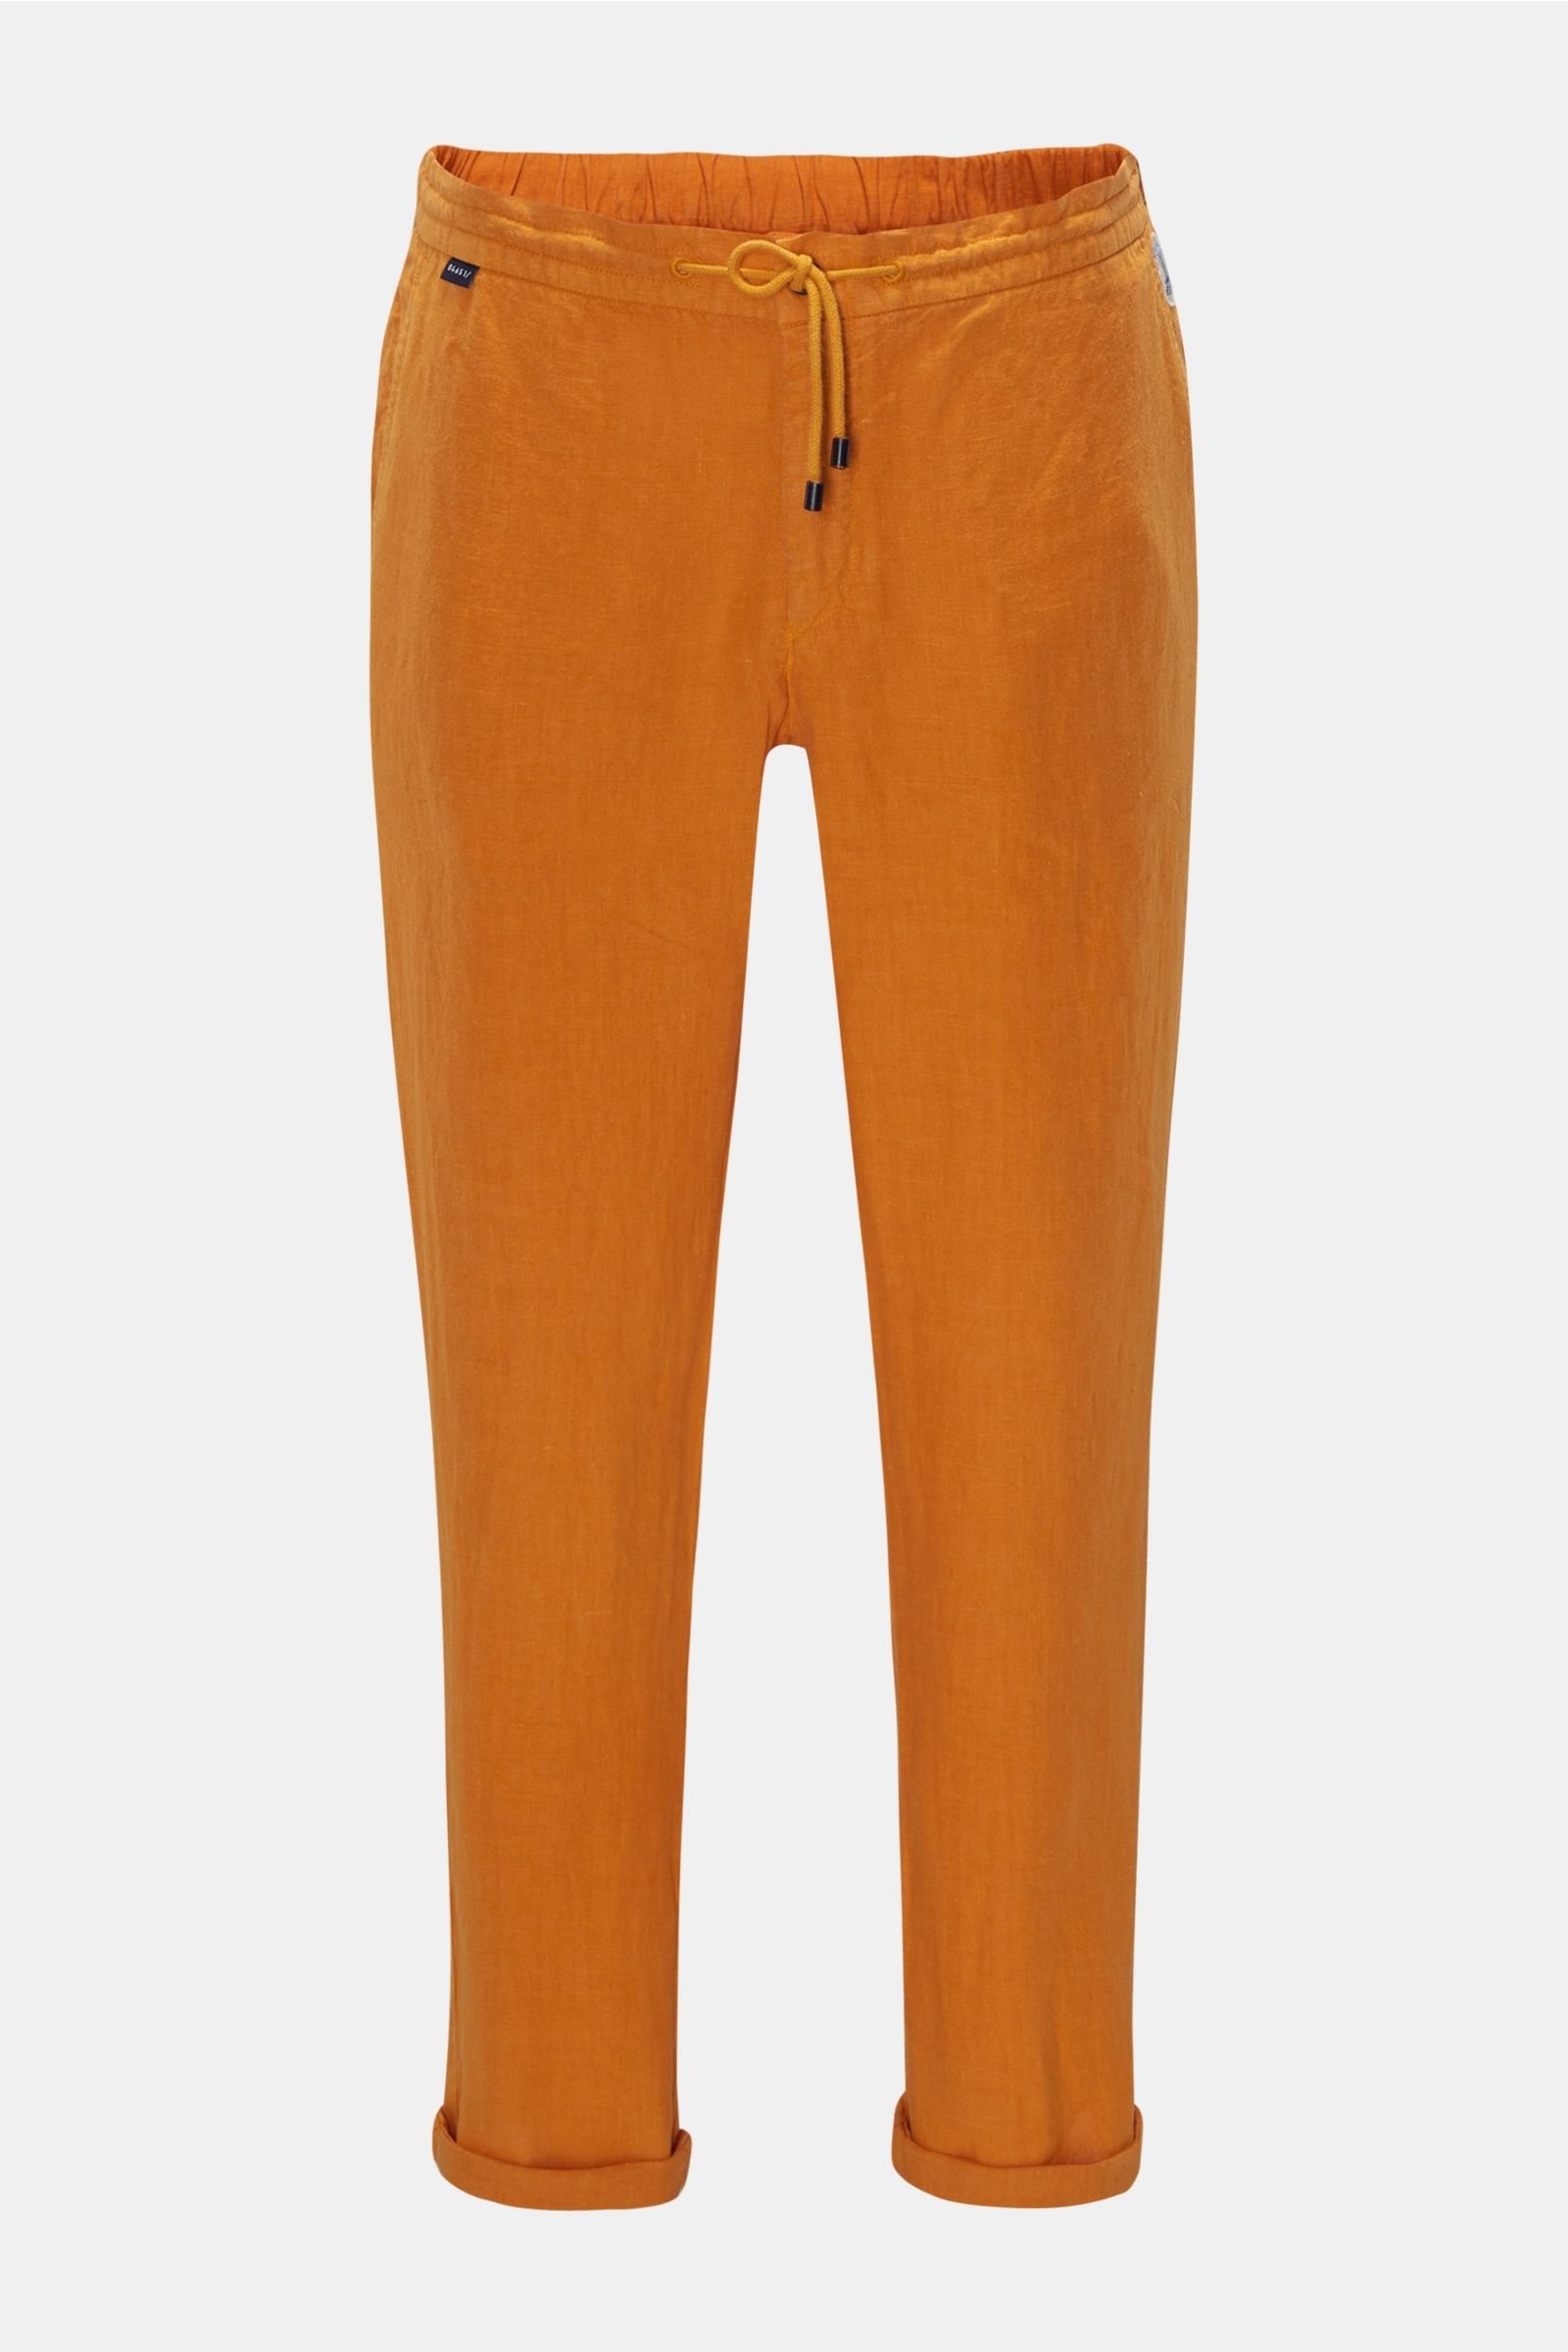 Linen jogger pants orange